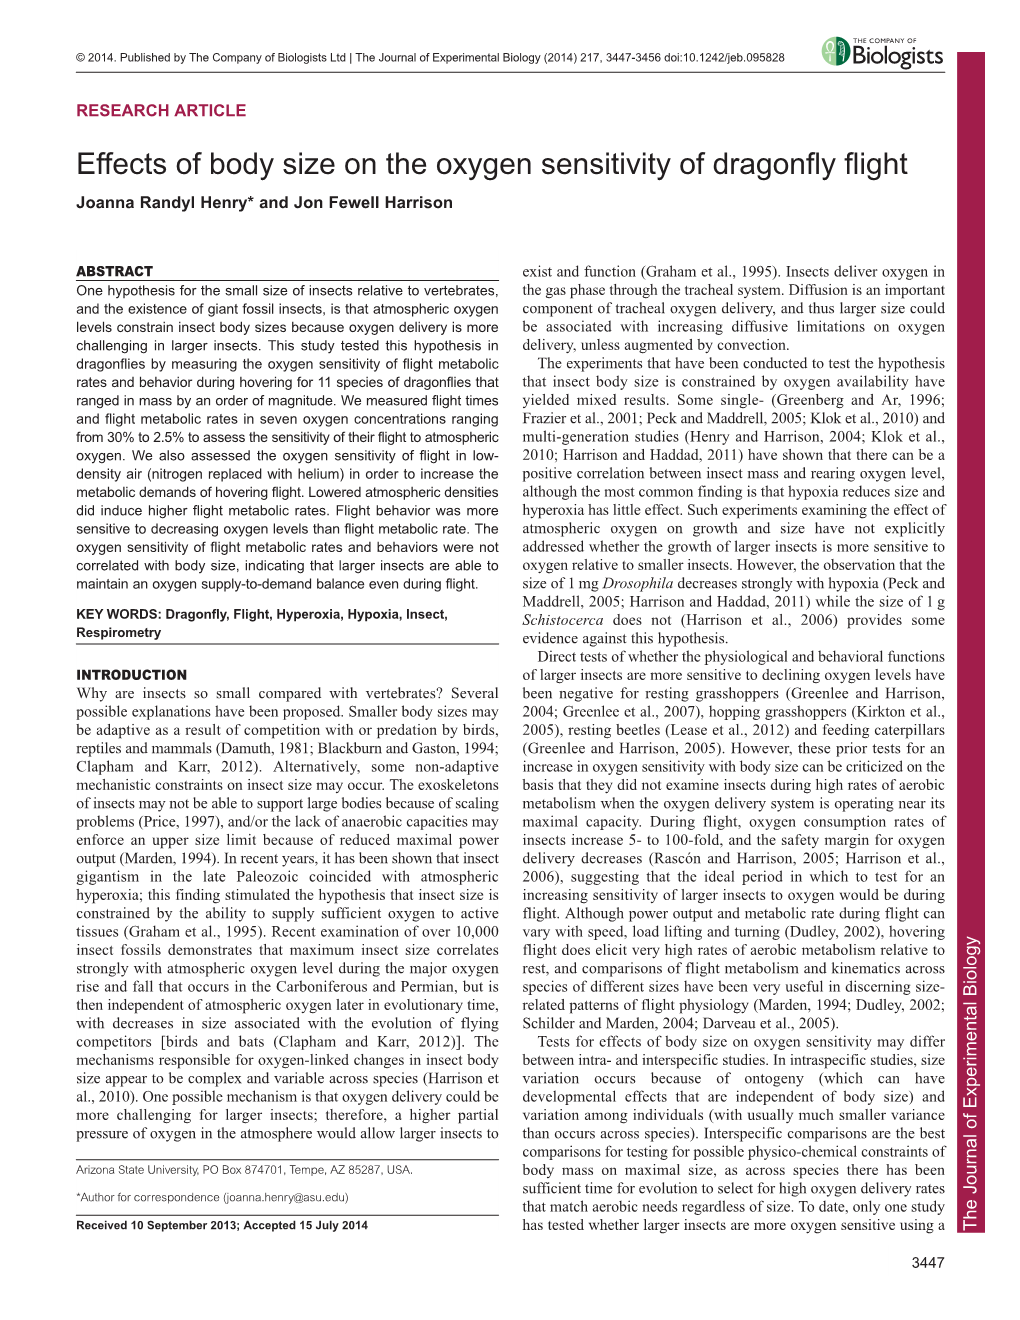 Effects of Body Size on the Oxygen Sensitivity of Dragonfly Flight